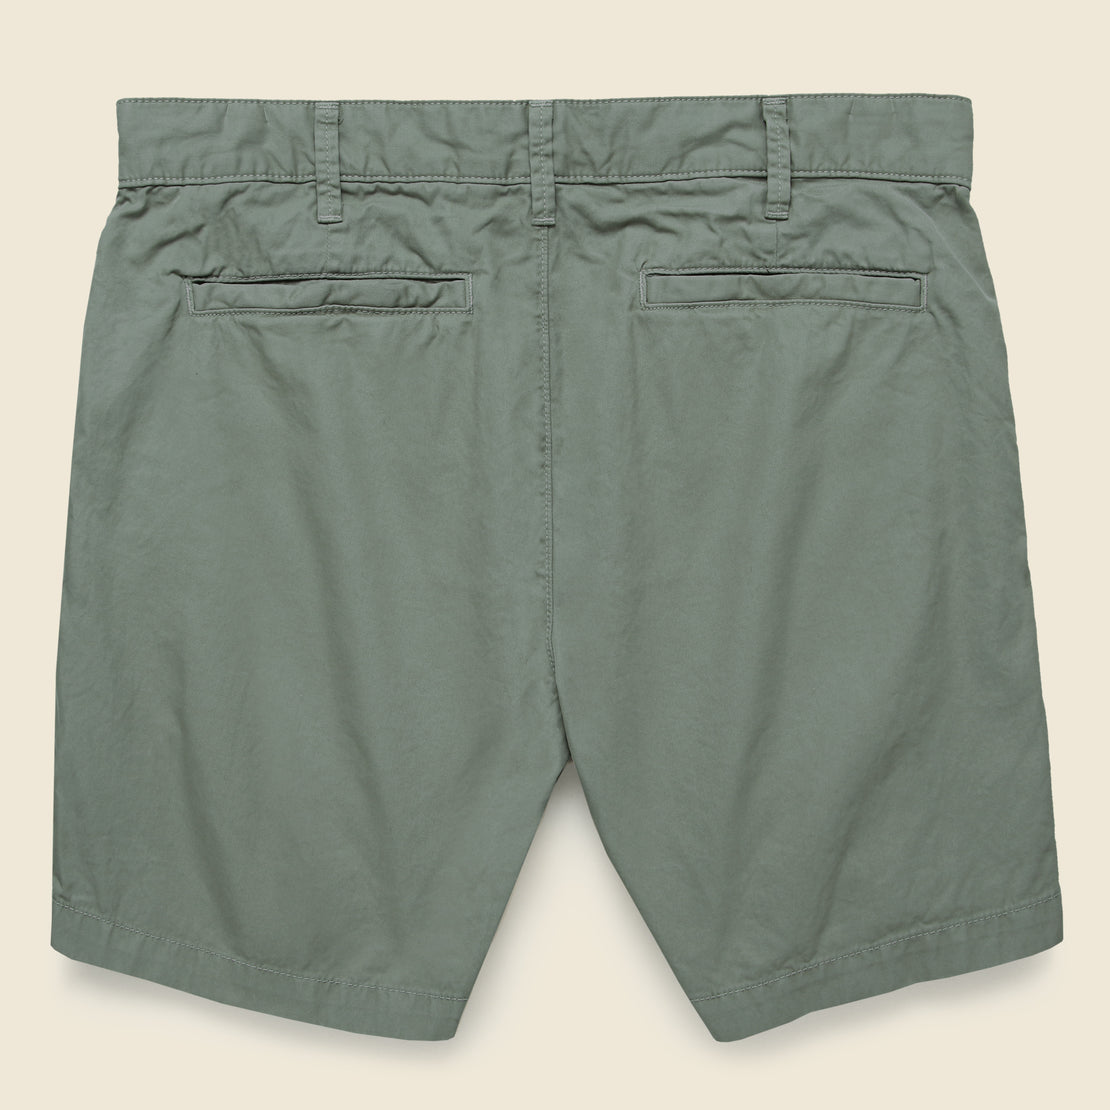 6-inch Twill Bermuda Short - Park - Save Khaki - STAG Provisions - Shorts - Solid